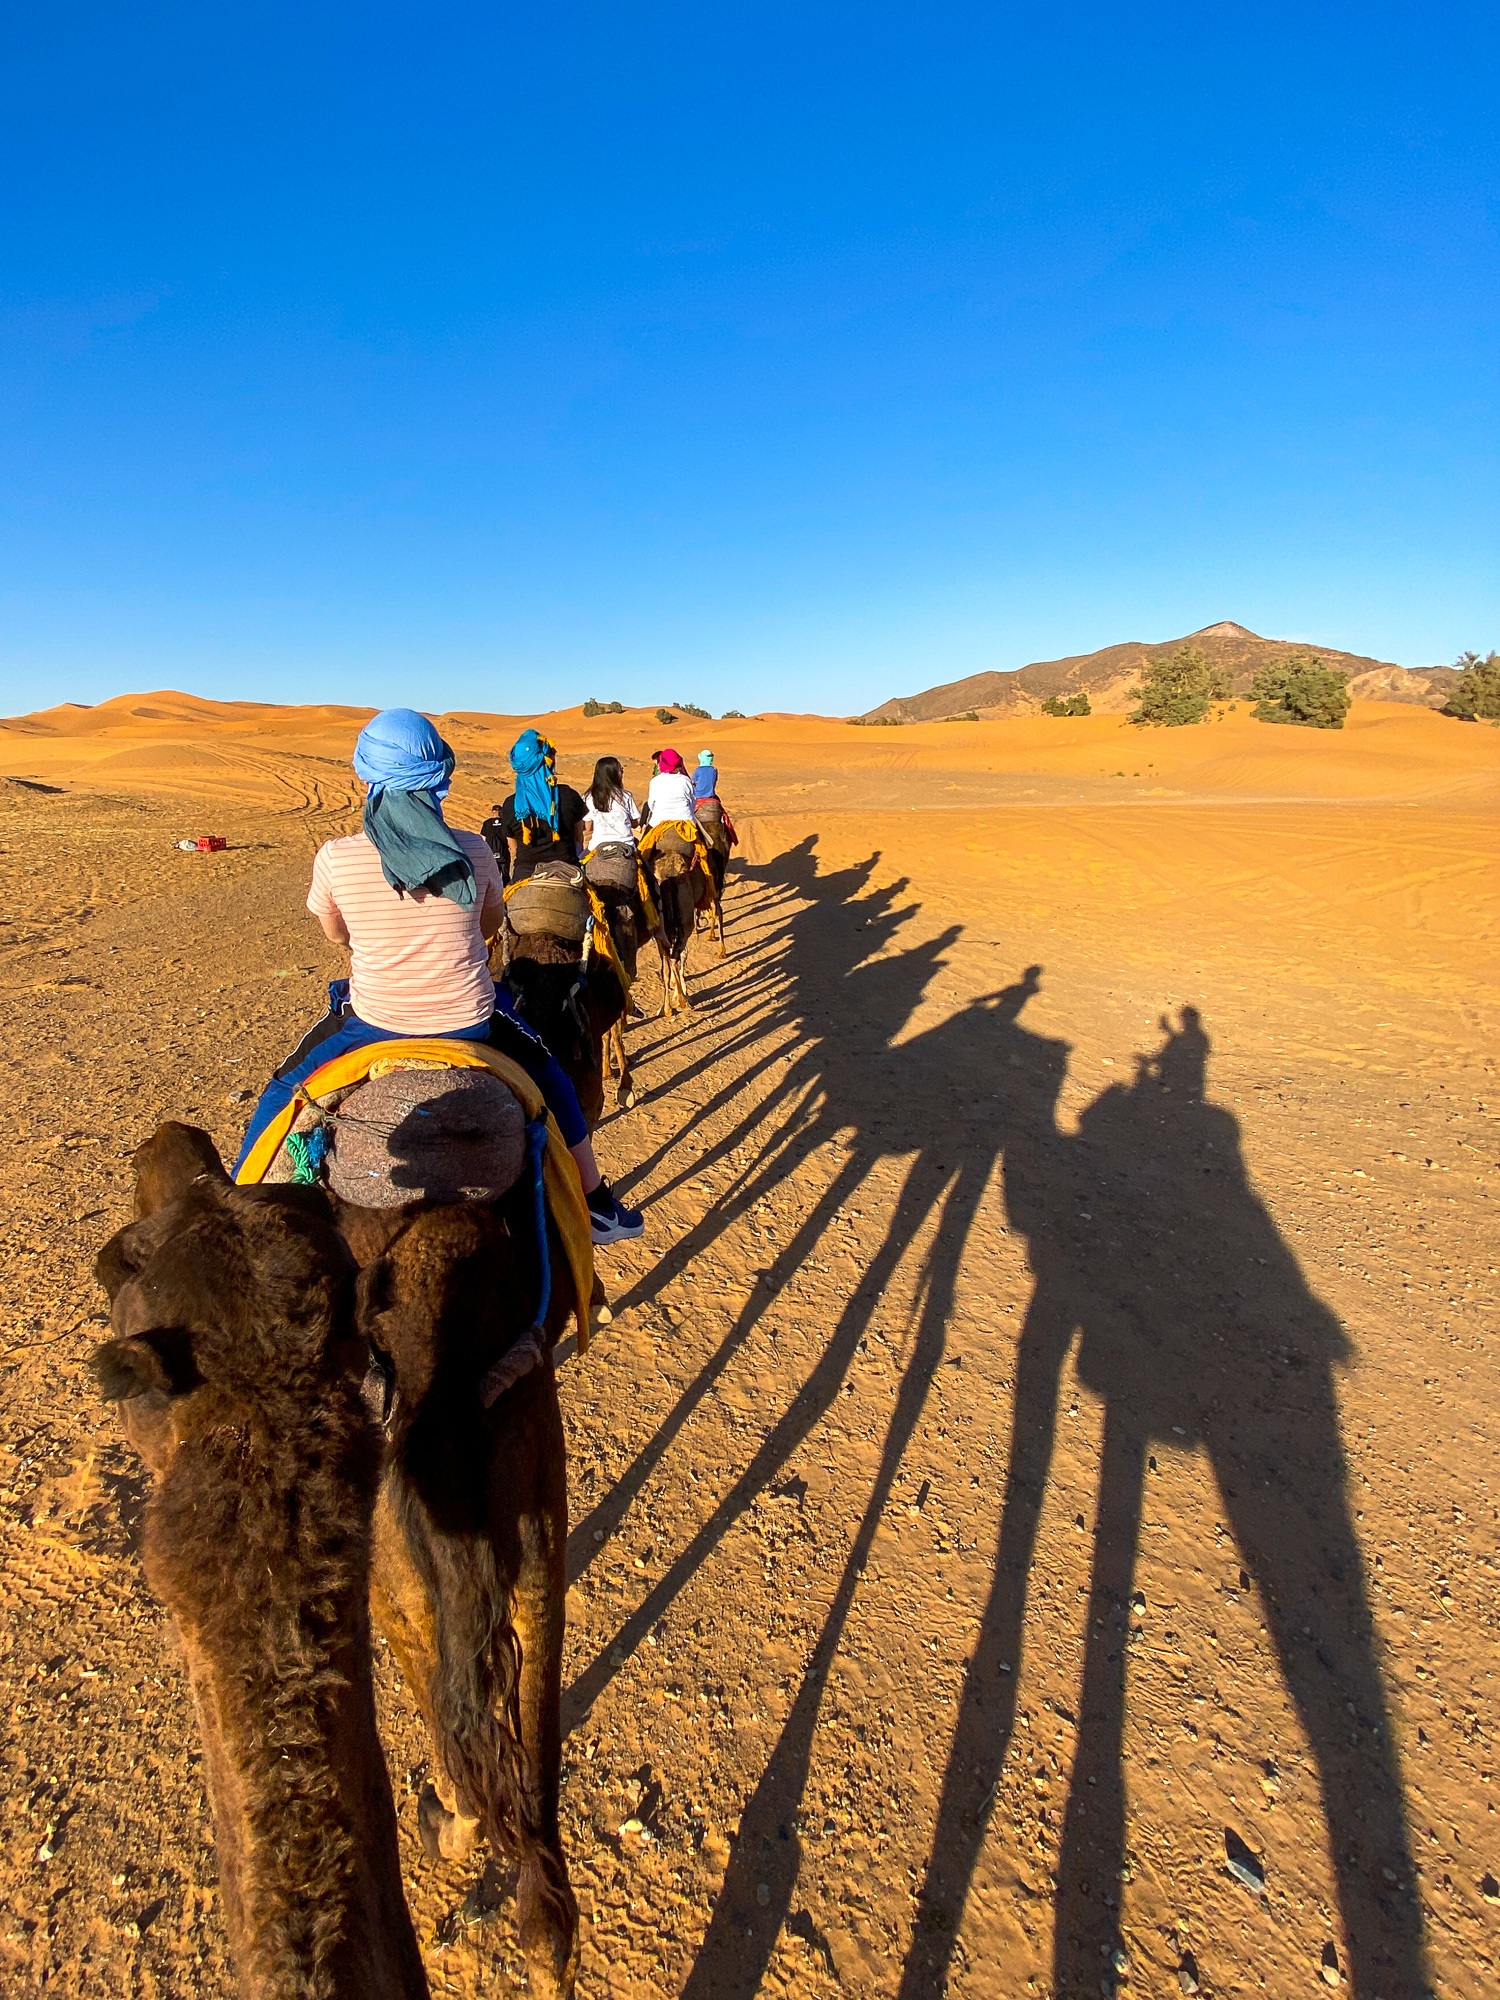 Camel shadows in the Saharan Desert